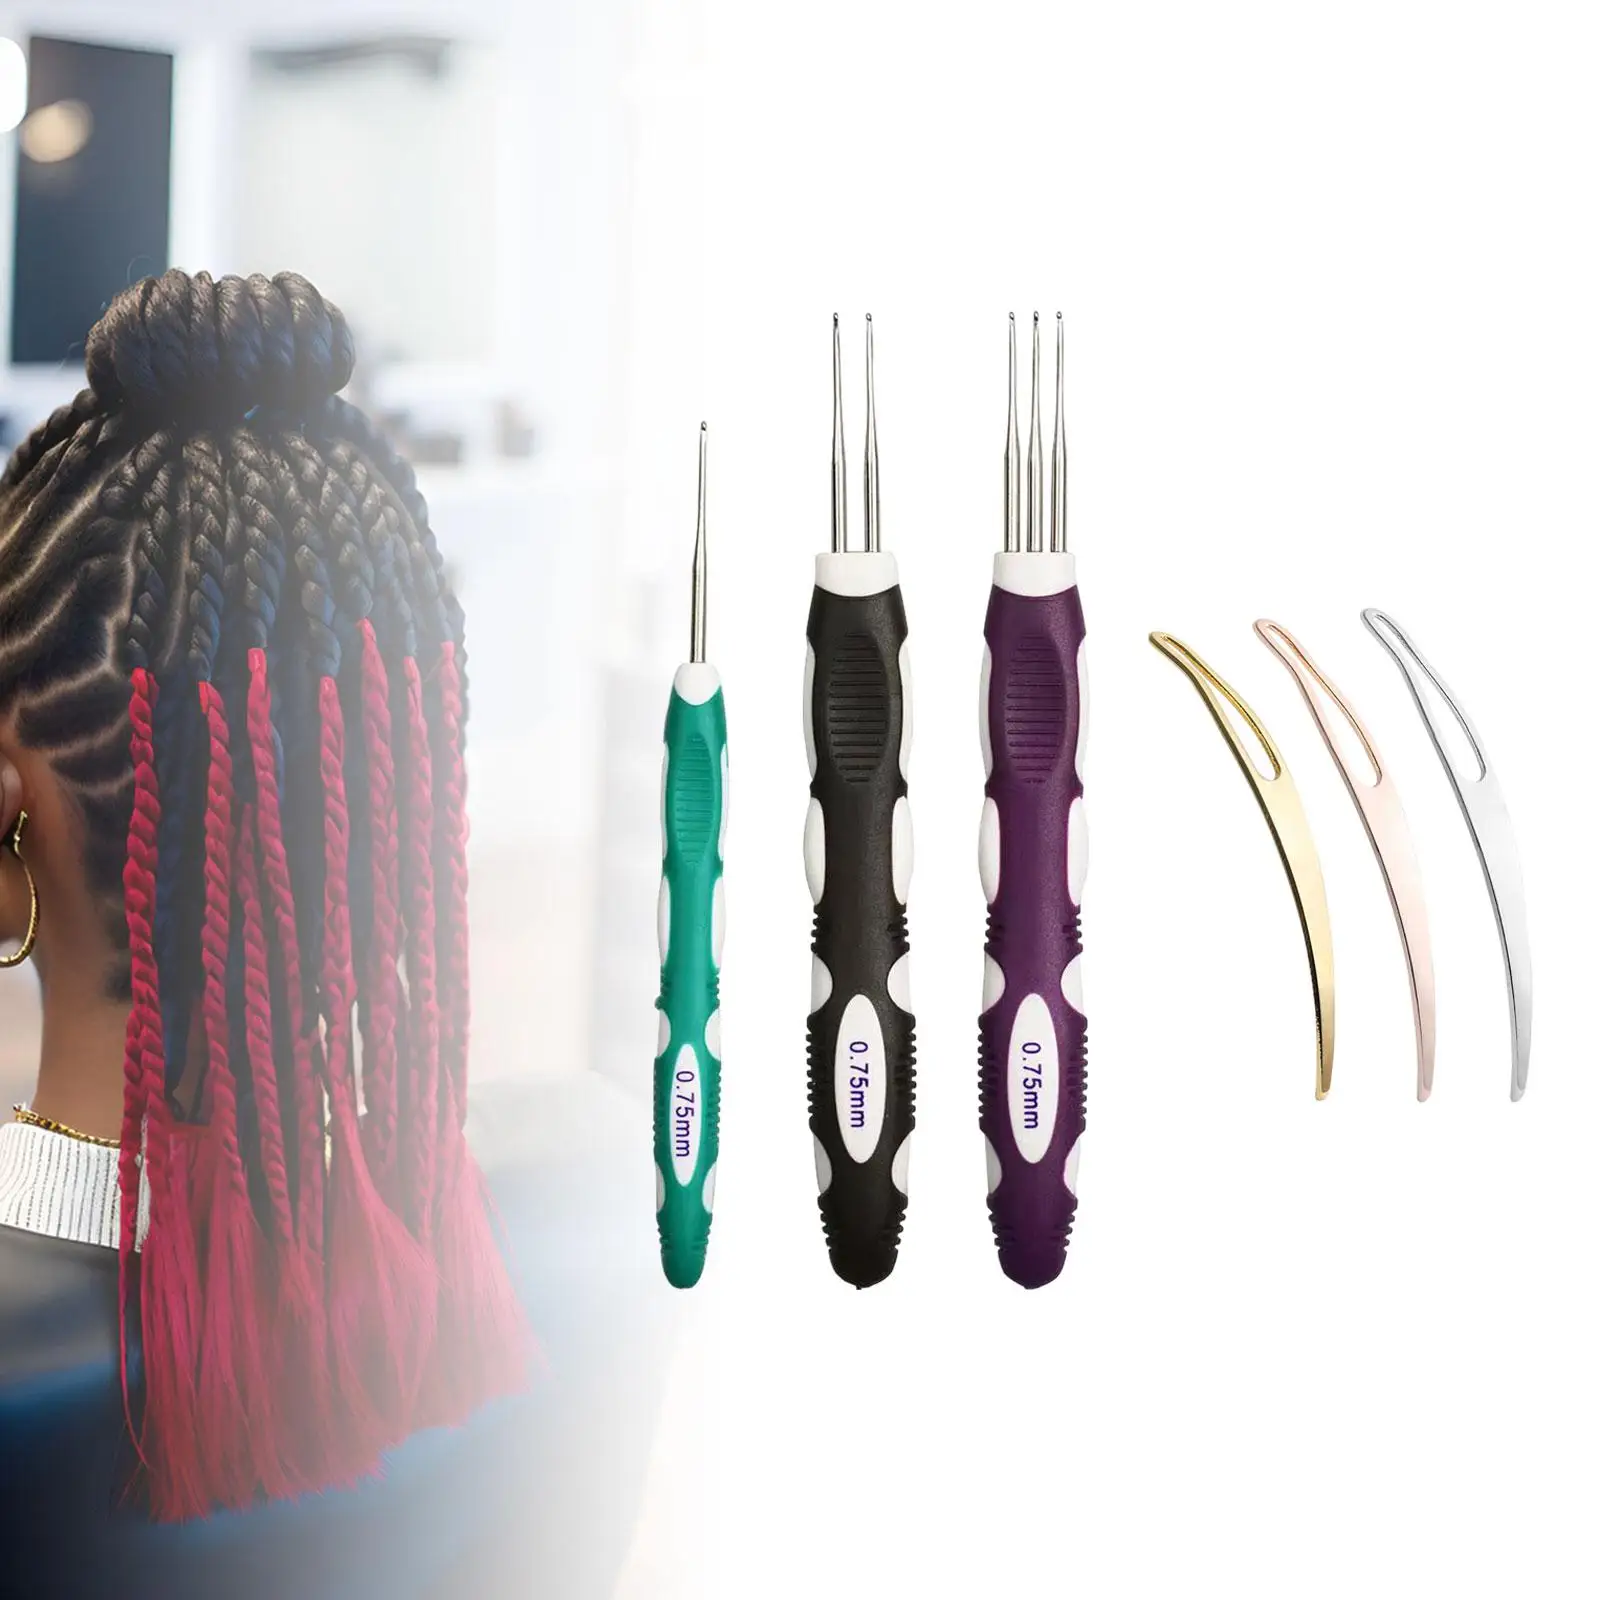 6x Dreadlock Crochet Hook for Hair Braid Hair Locking Tool Hair Styling DIY Your Hairstyle Hair Extensions Tool Hair Braid Craft